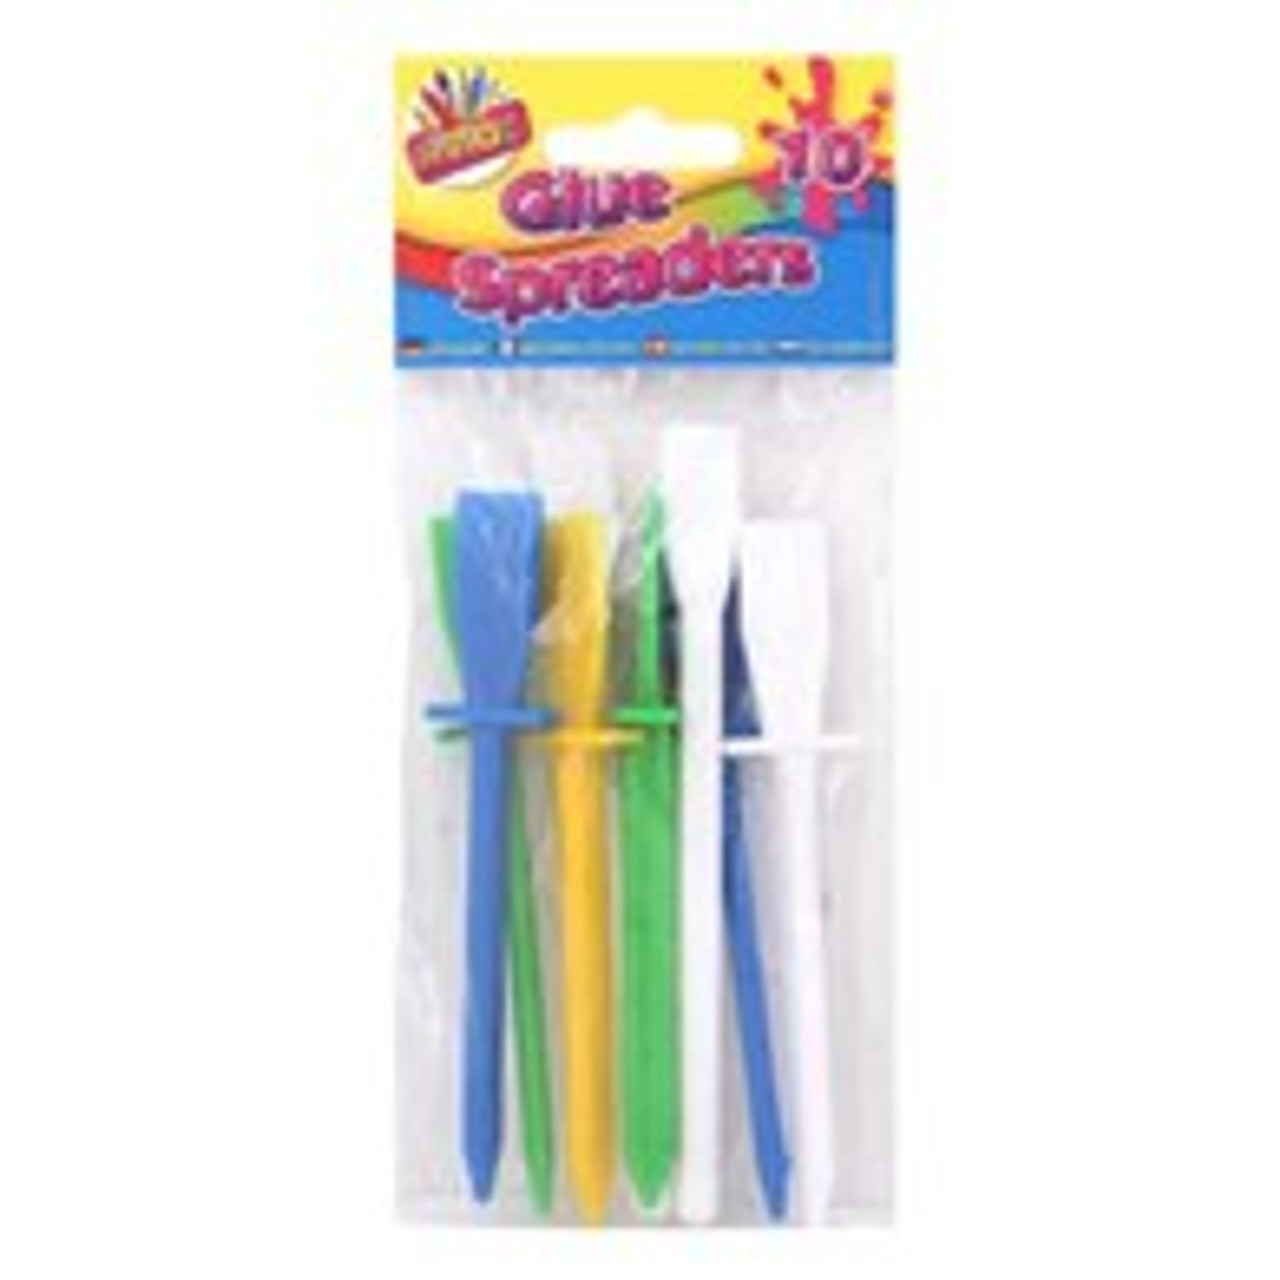 Artbox 10 glitter glue pens set of 10 assorted colours